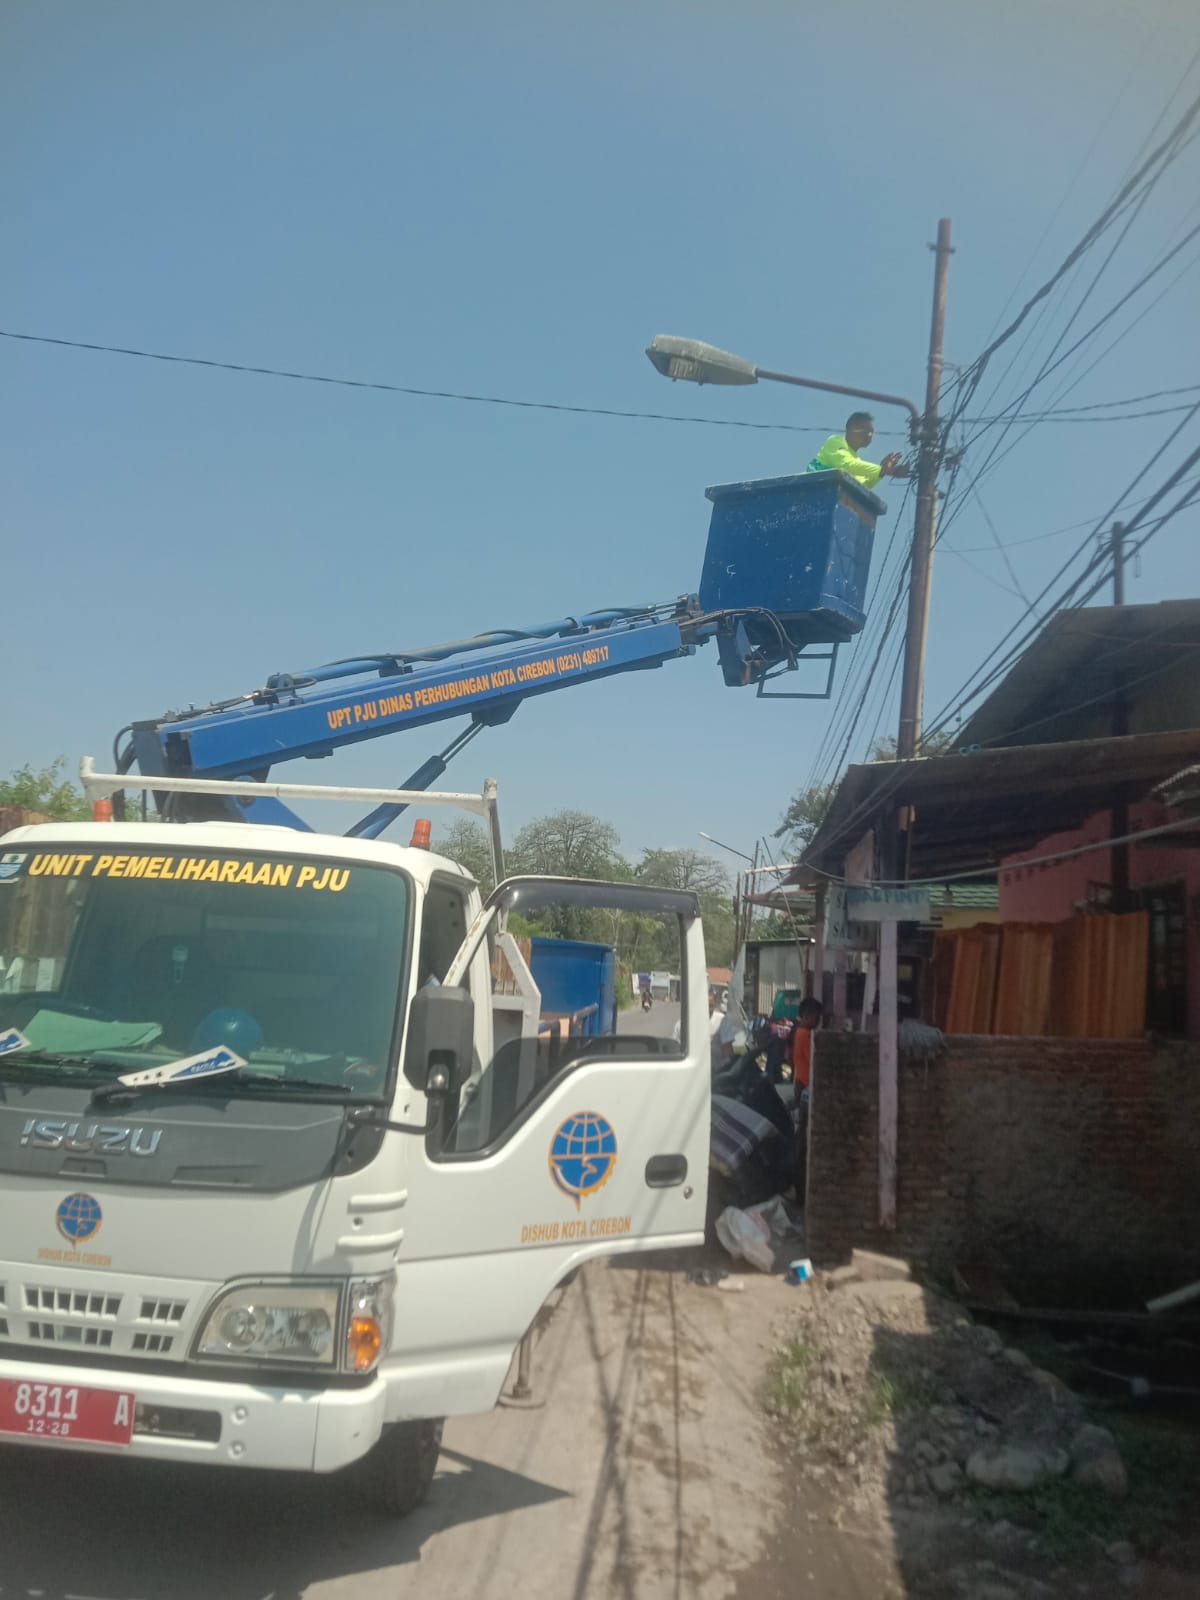 Gercep! Dishub Kota Cirebon Perbaiki Lampu PJU yang rusak di Jalan Pronggol 